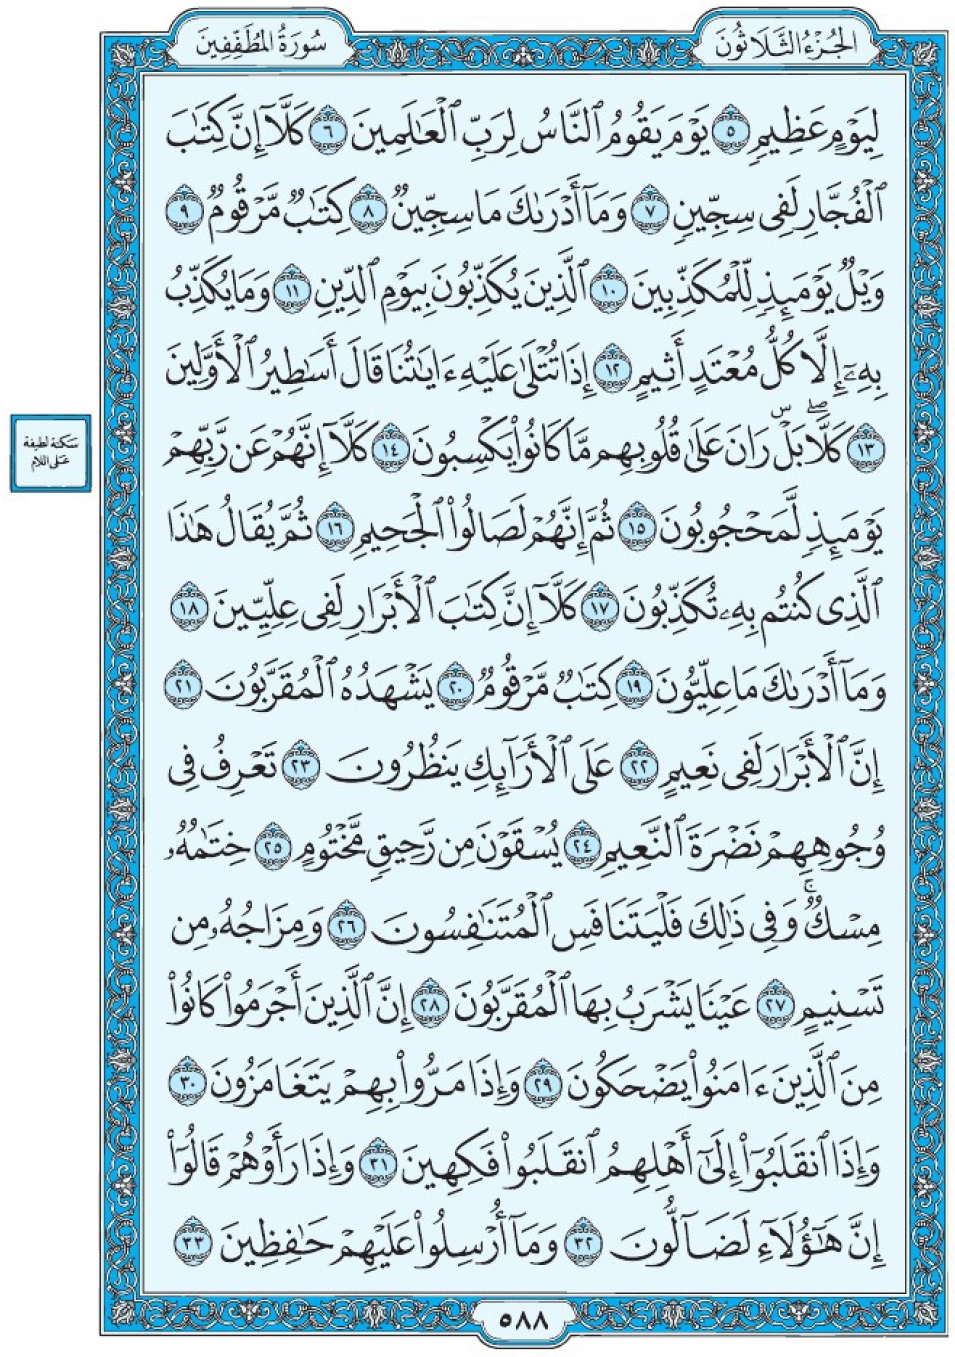 Коран Мединский мусхаф страница 588 сура аль-Мутаффифин, аят 5-32